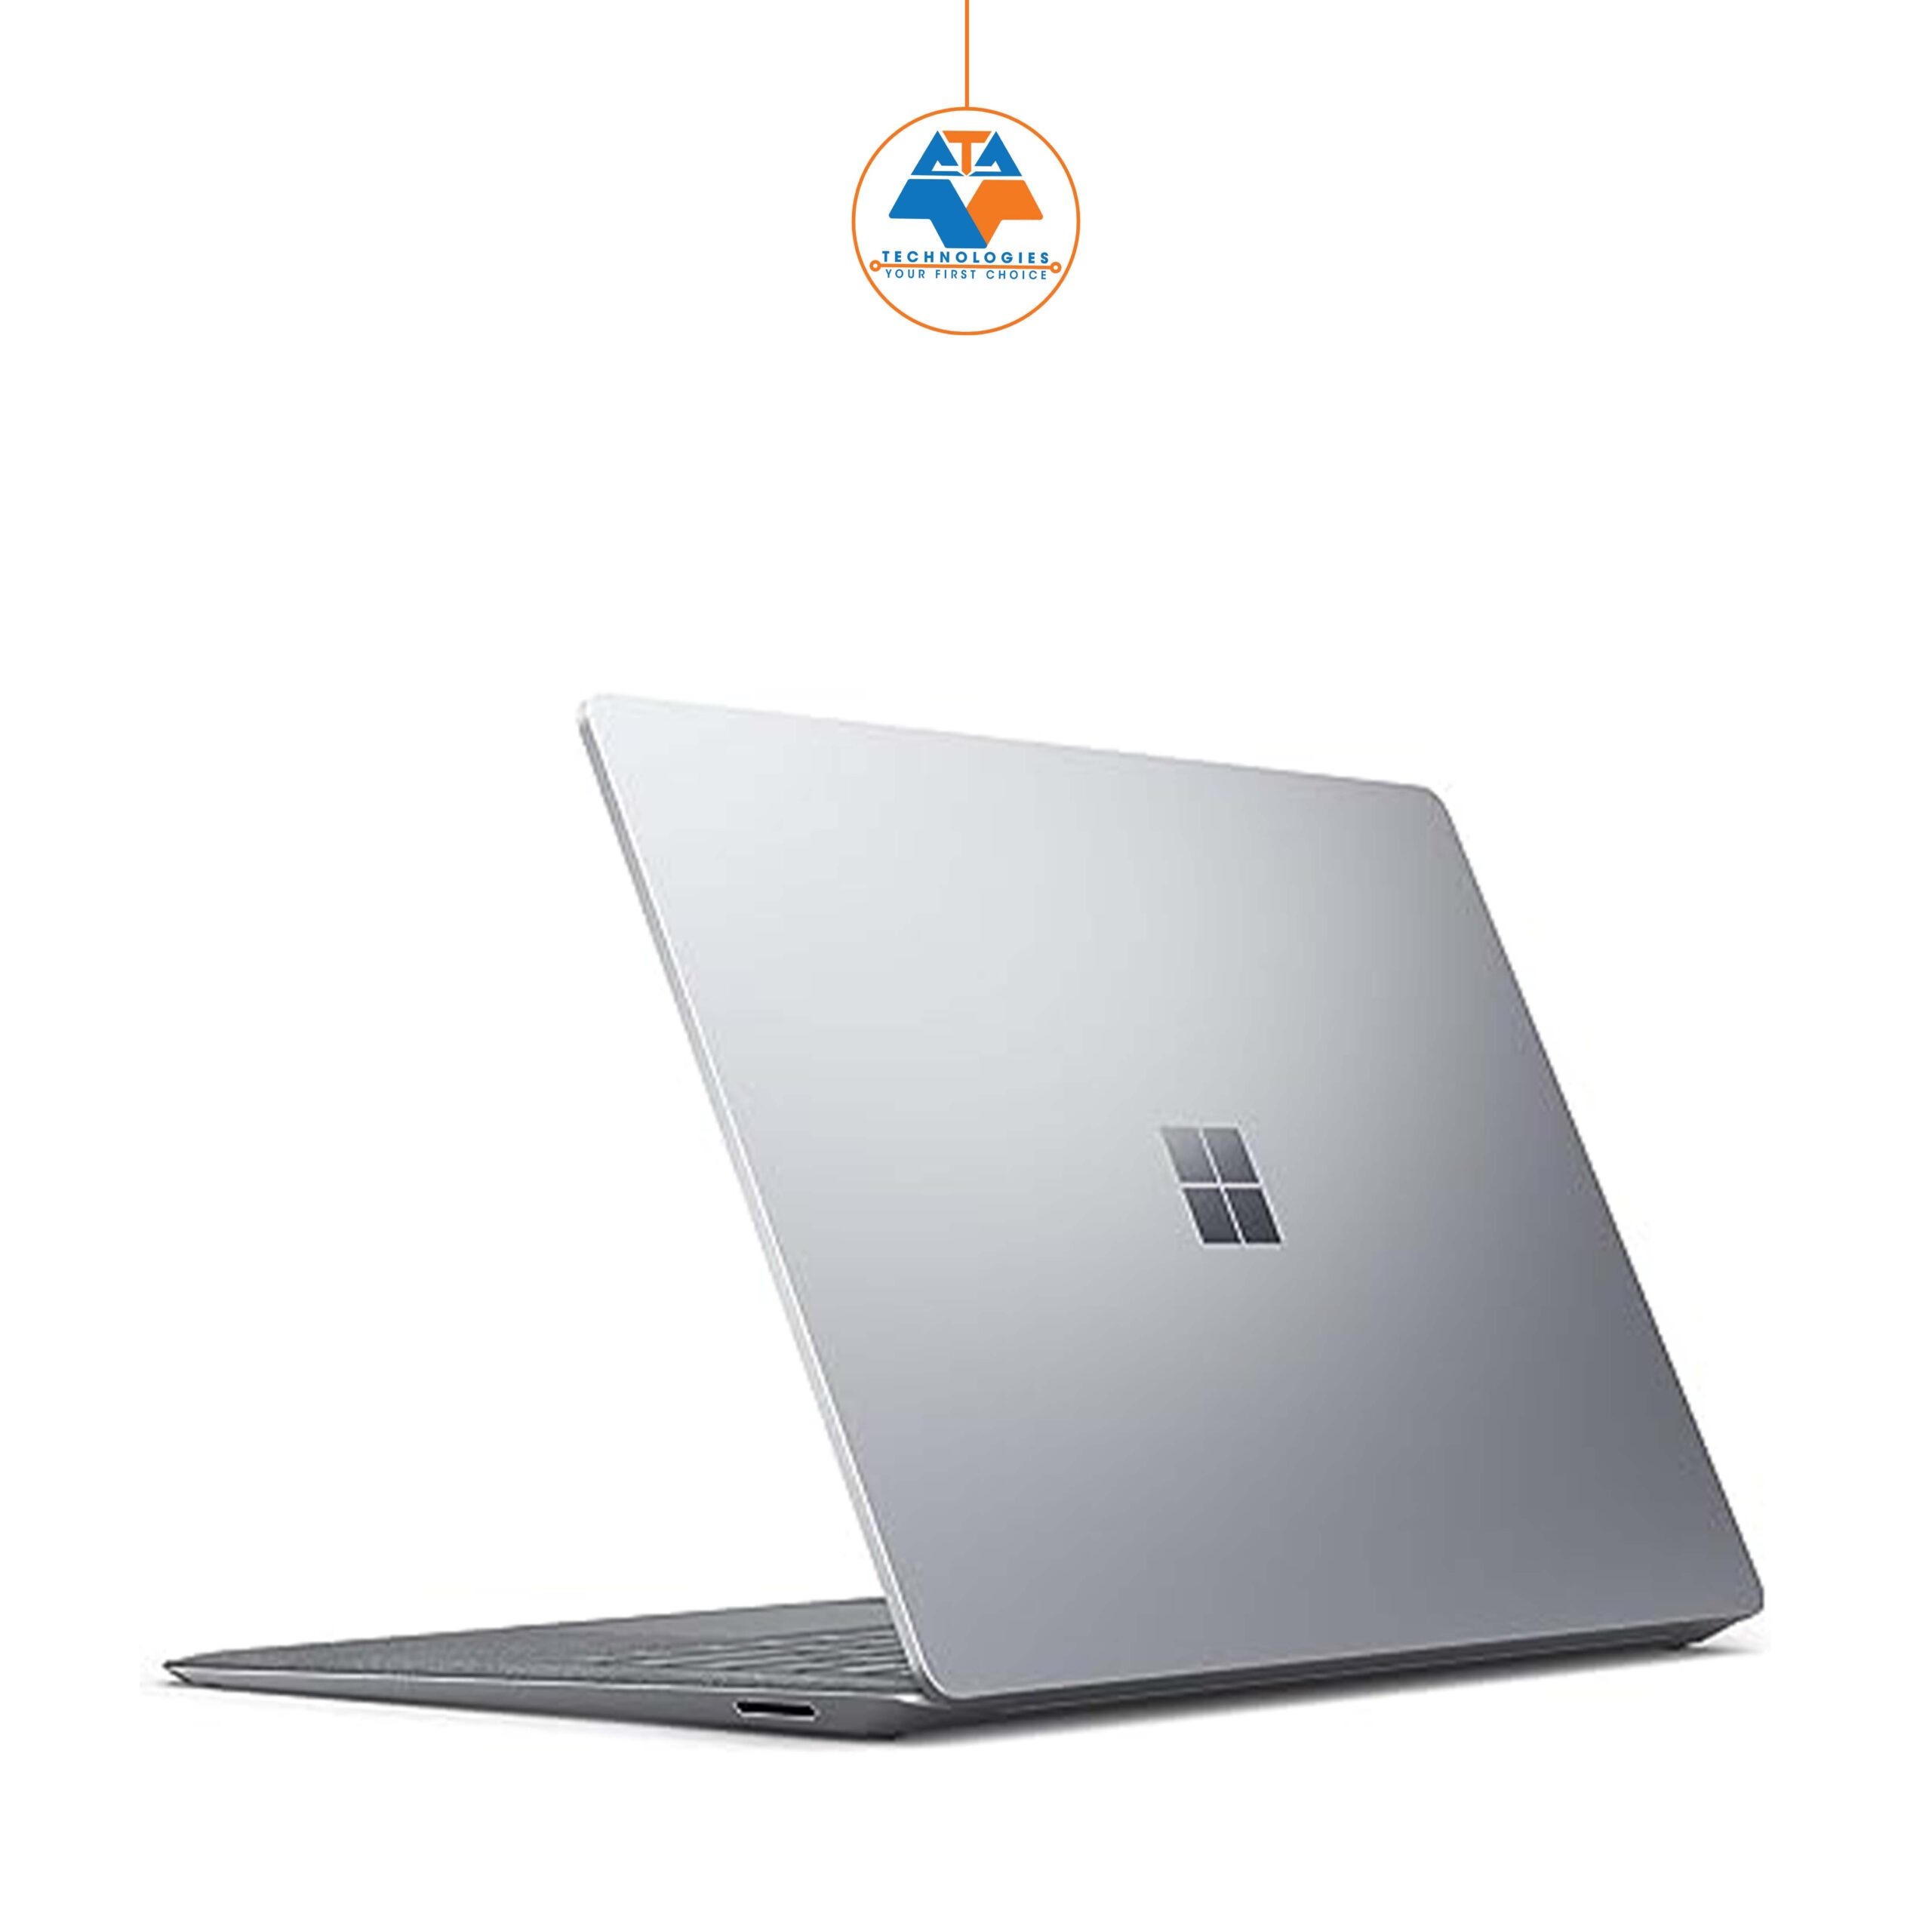 Microsoft Surface Laptop 2, Core i7 8th Generation